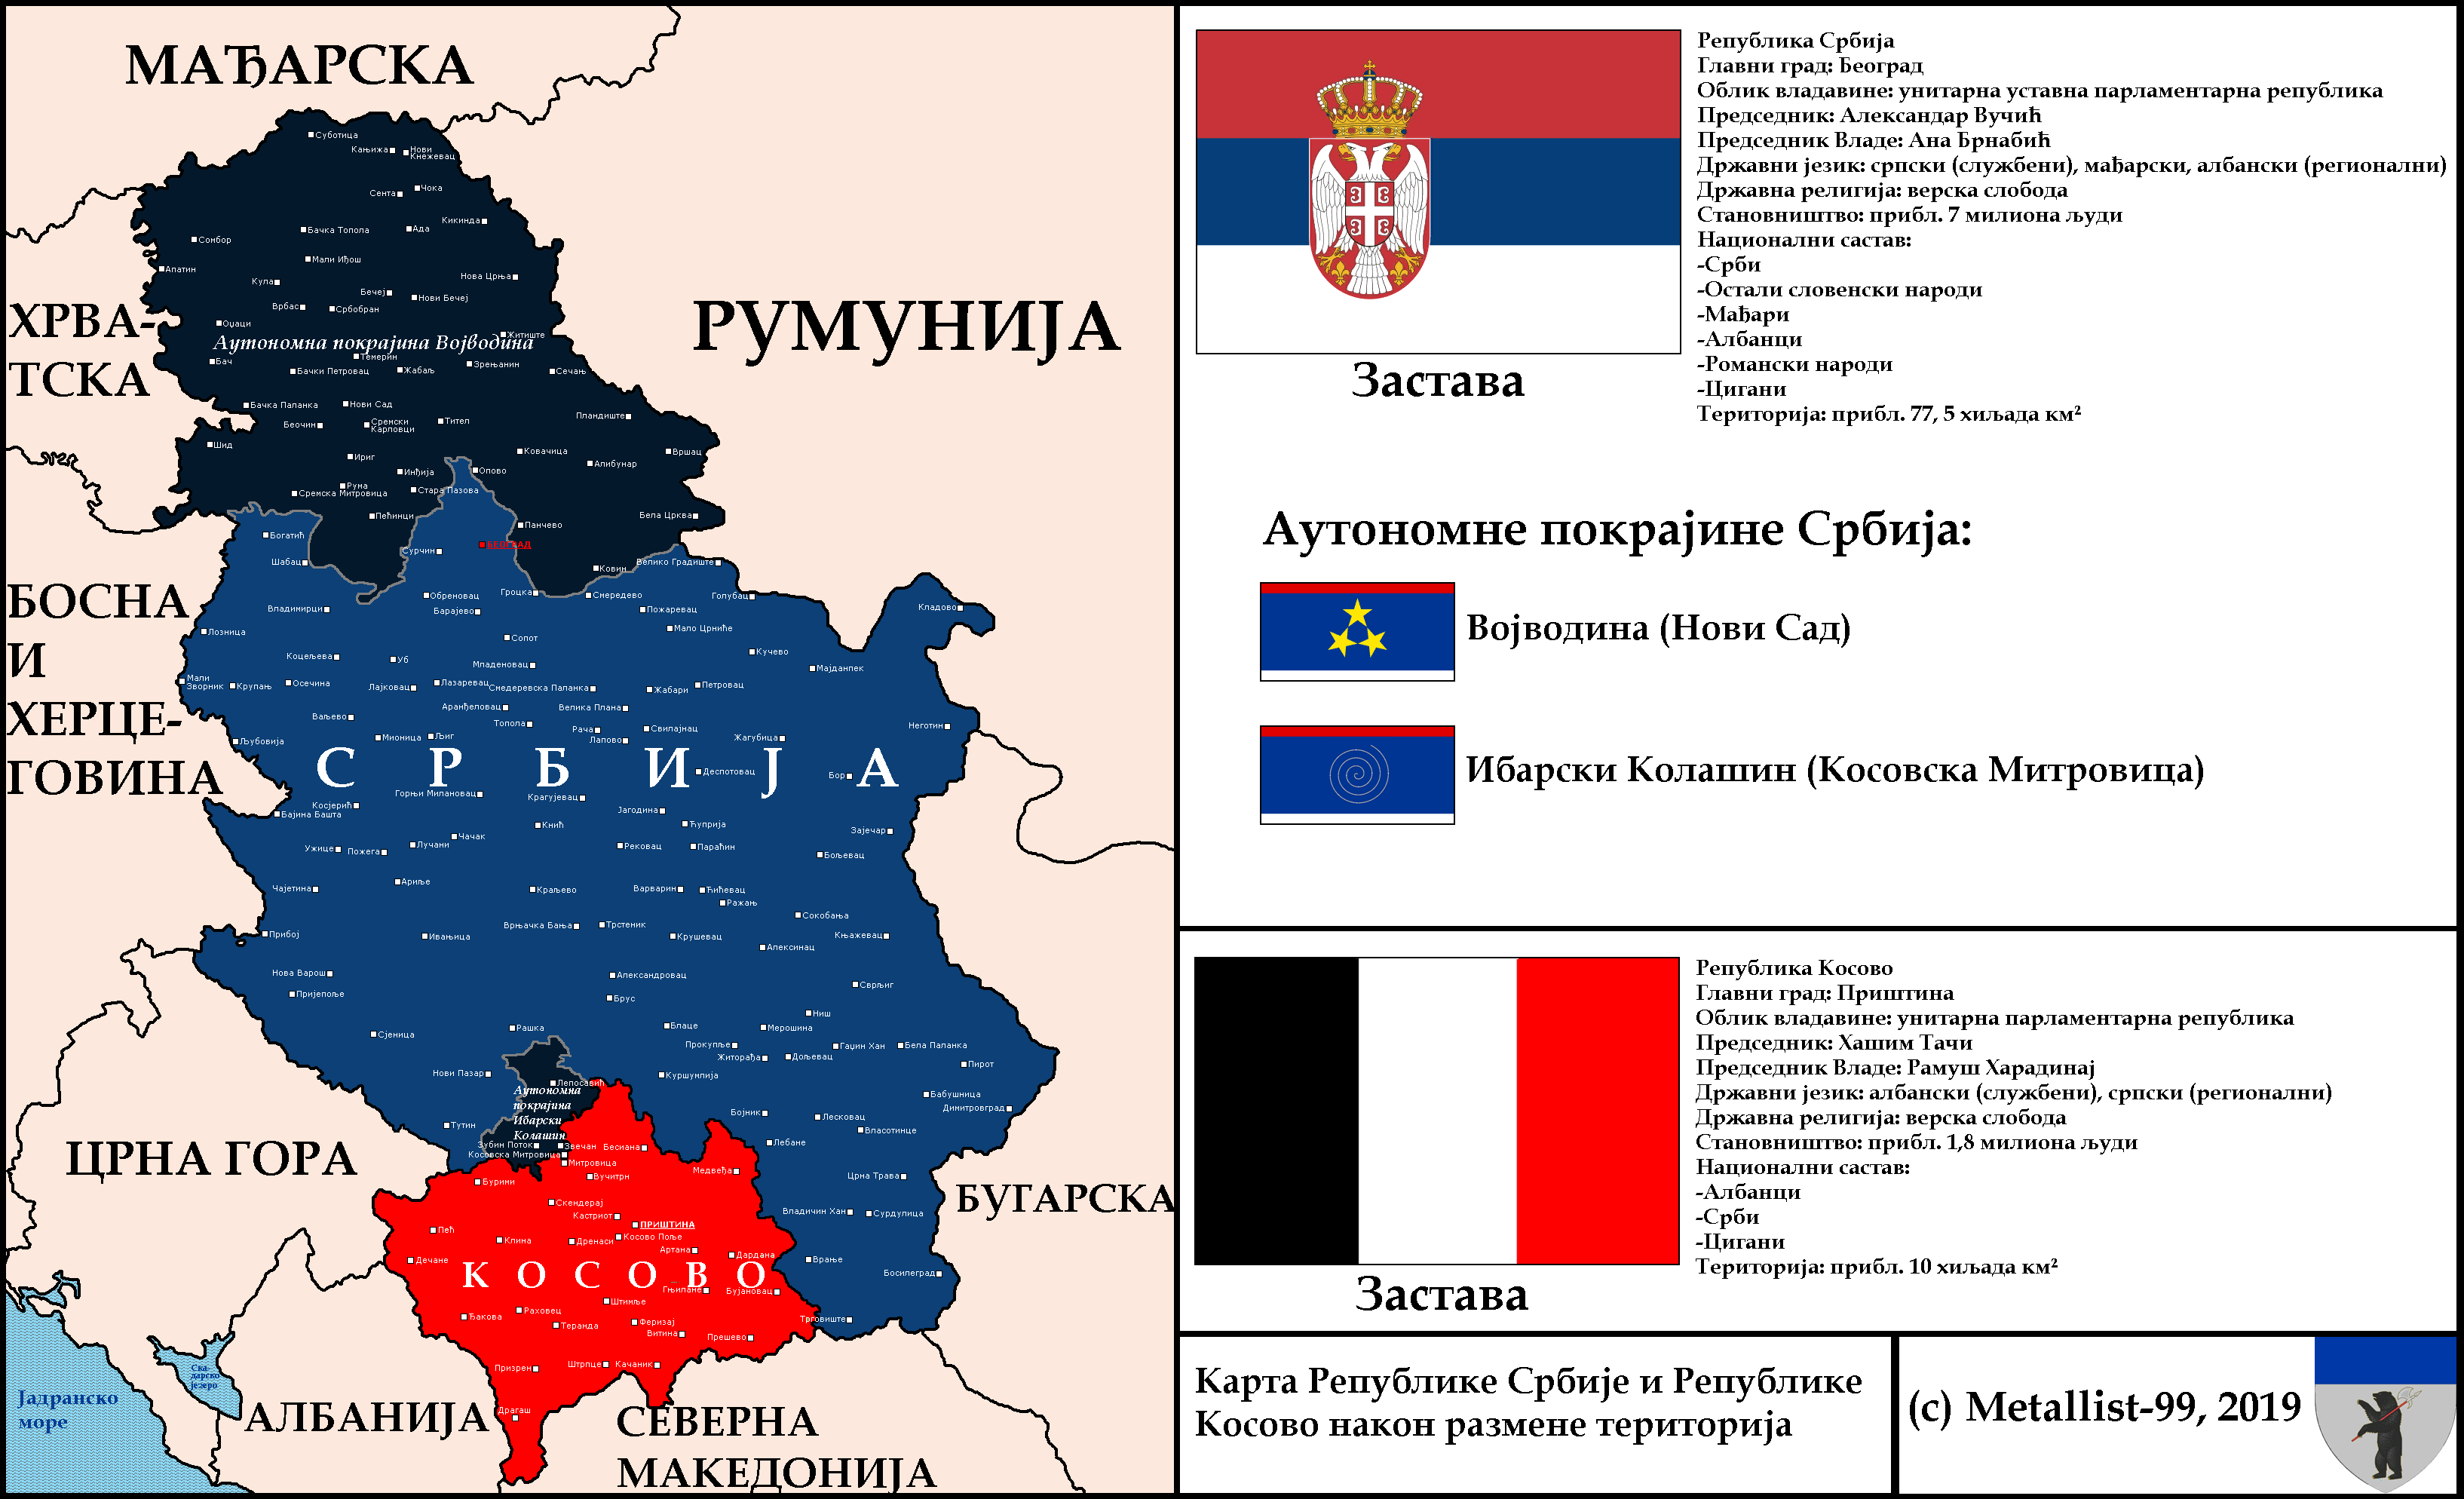 Republic of Vojvodina by matritum on DeviantArt